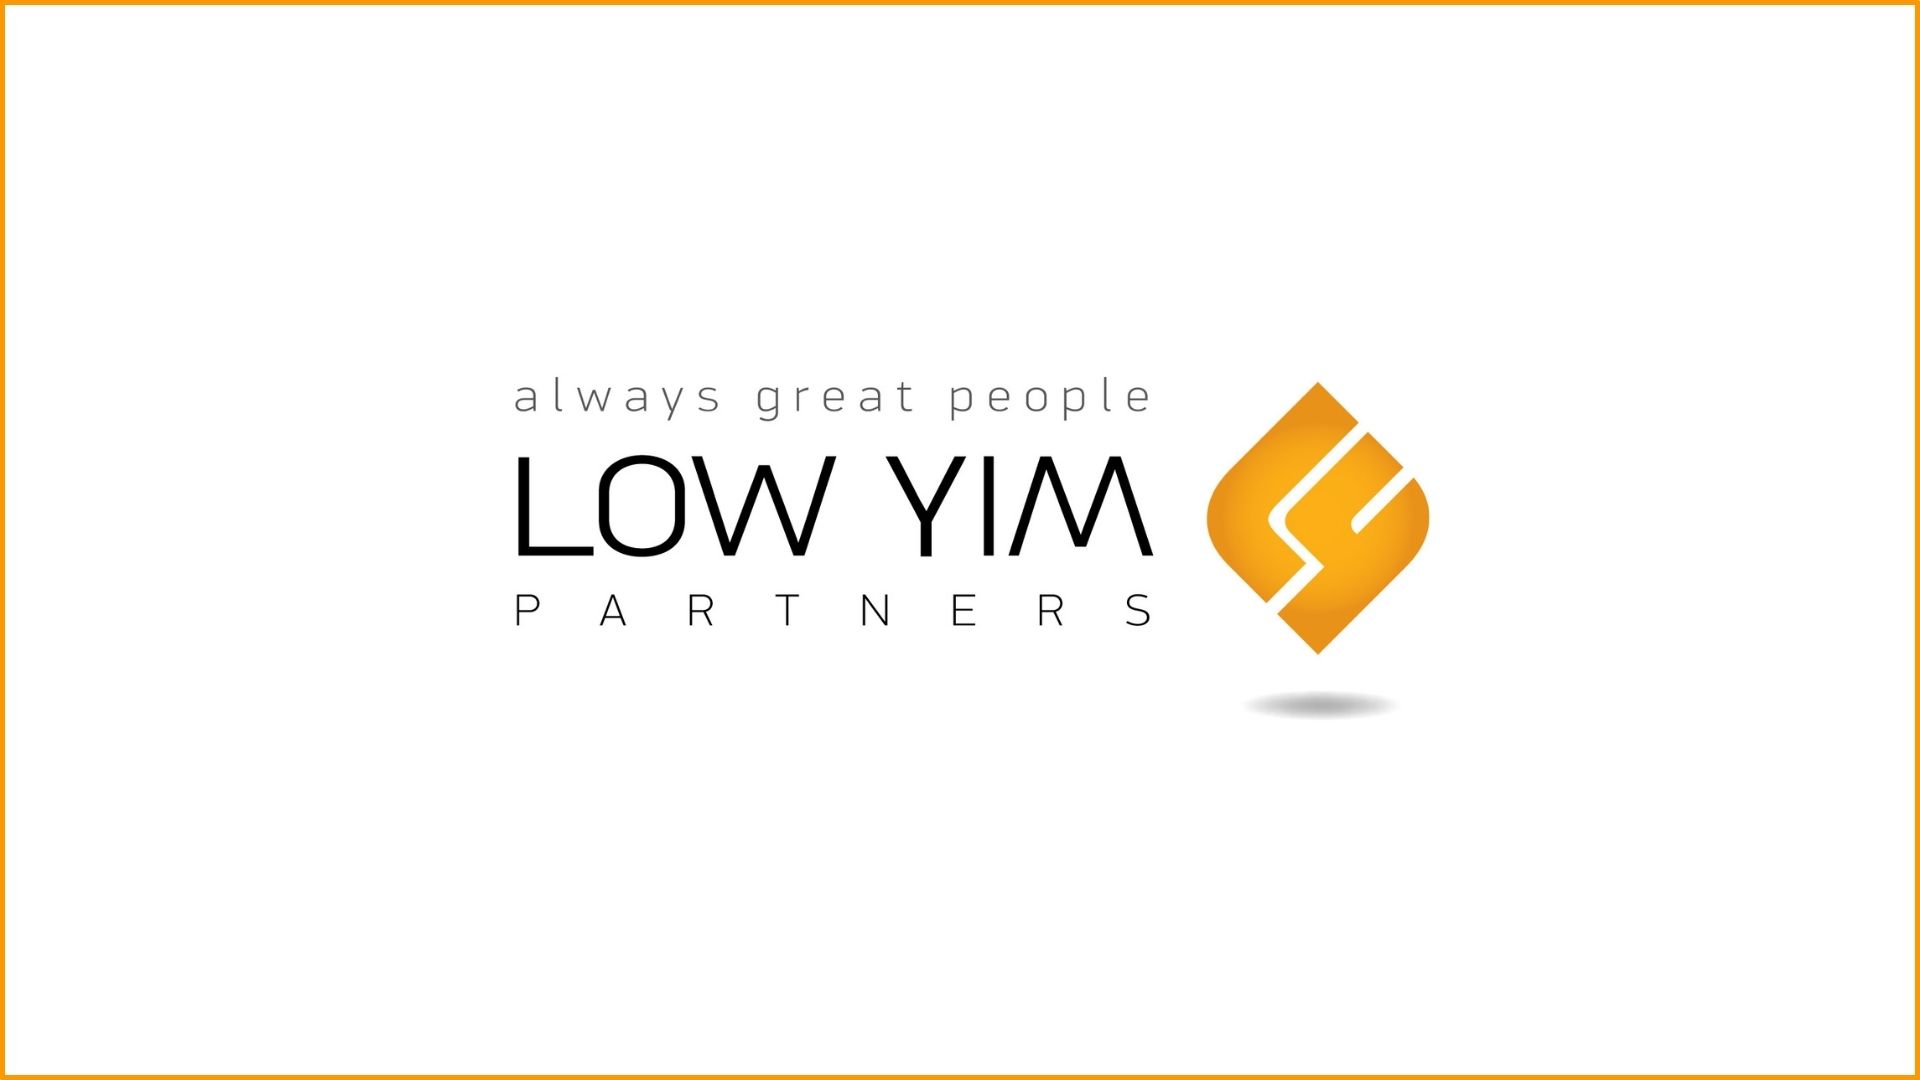 Low Yim Partners